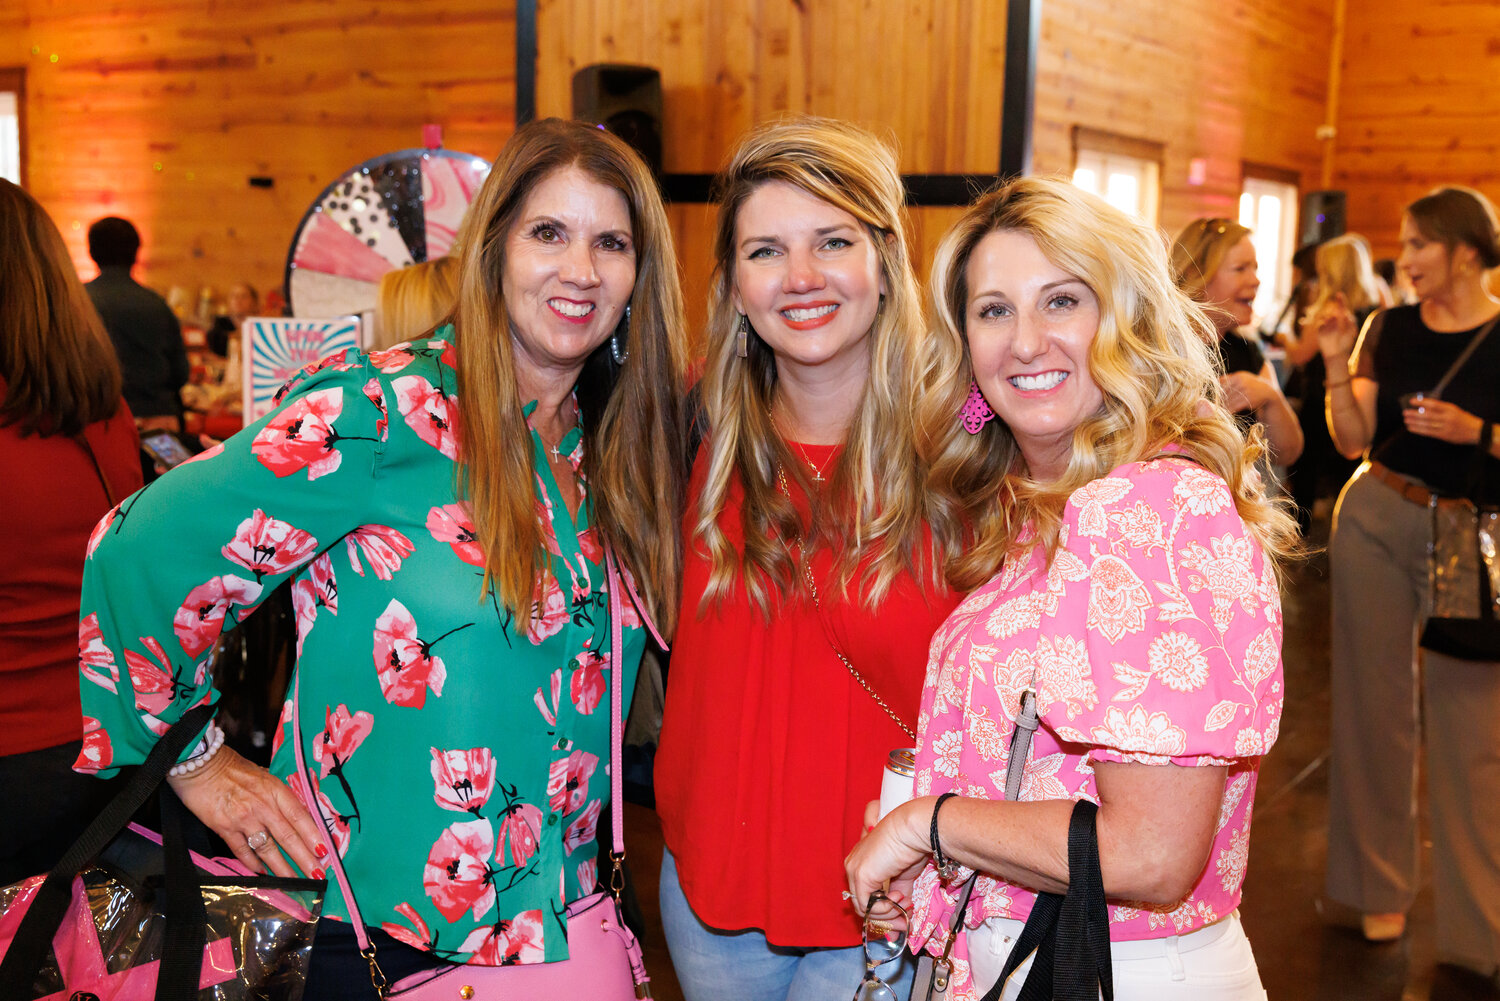 Lisa Bowman, Ashley Ballard, and Sherri Broglin have fun together at Ladies' Night Out.